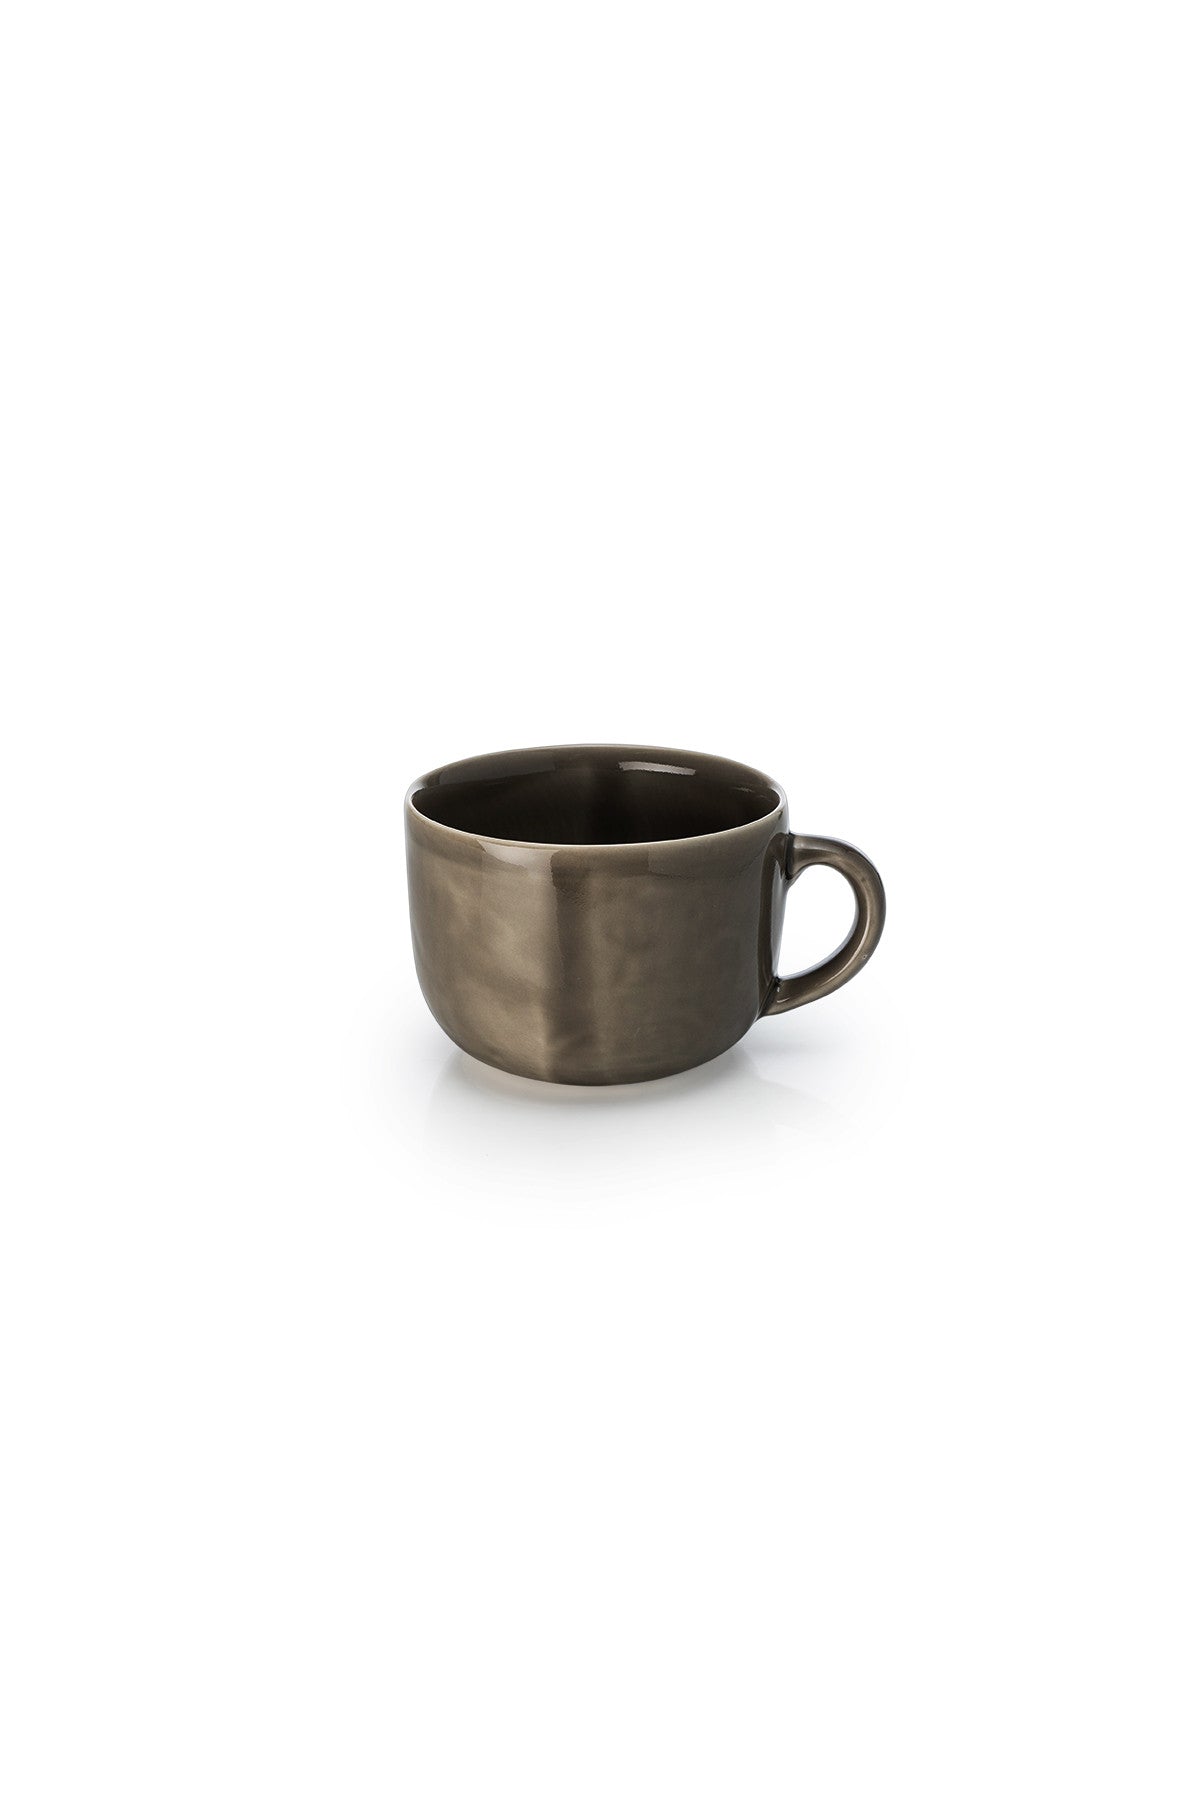 COFFEE/TEA CUP 4dl SVELTE, OLIVE